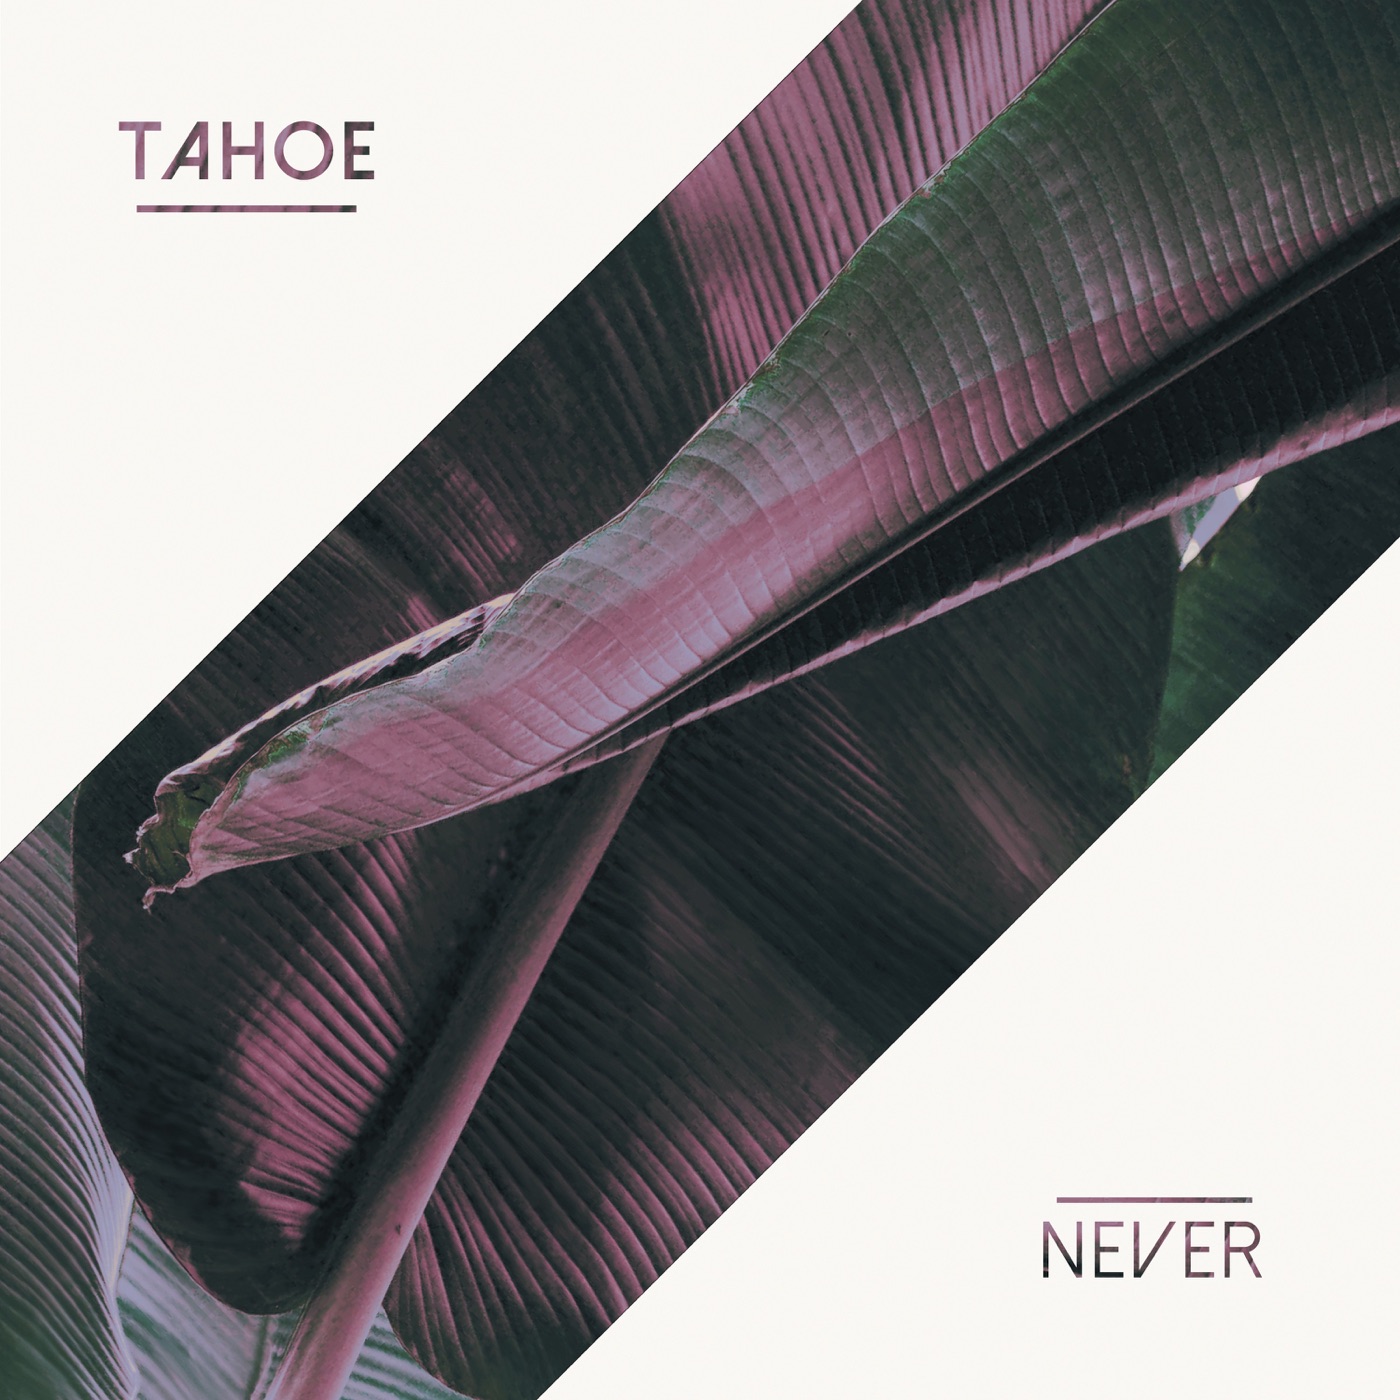 Tahoe - Never [EP] (2017)